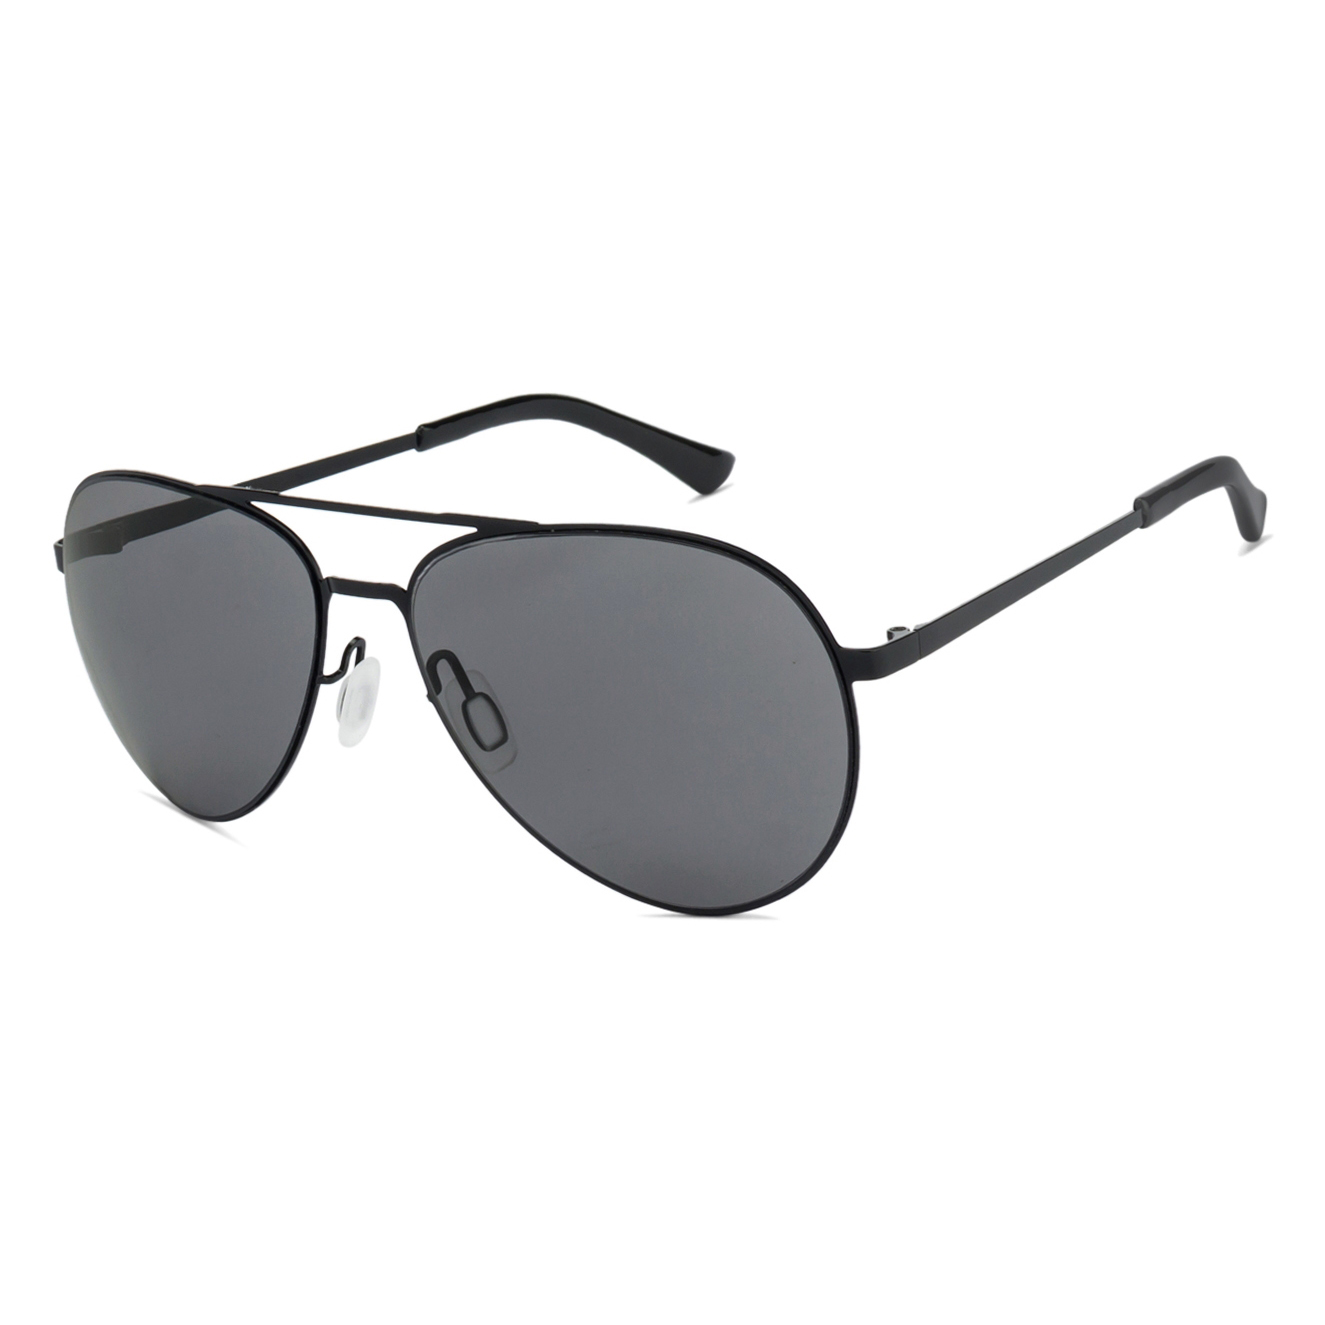 Aviator metal classic sunglasses 21408